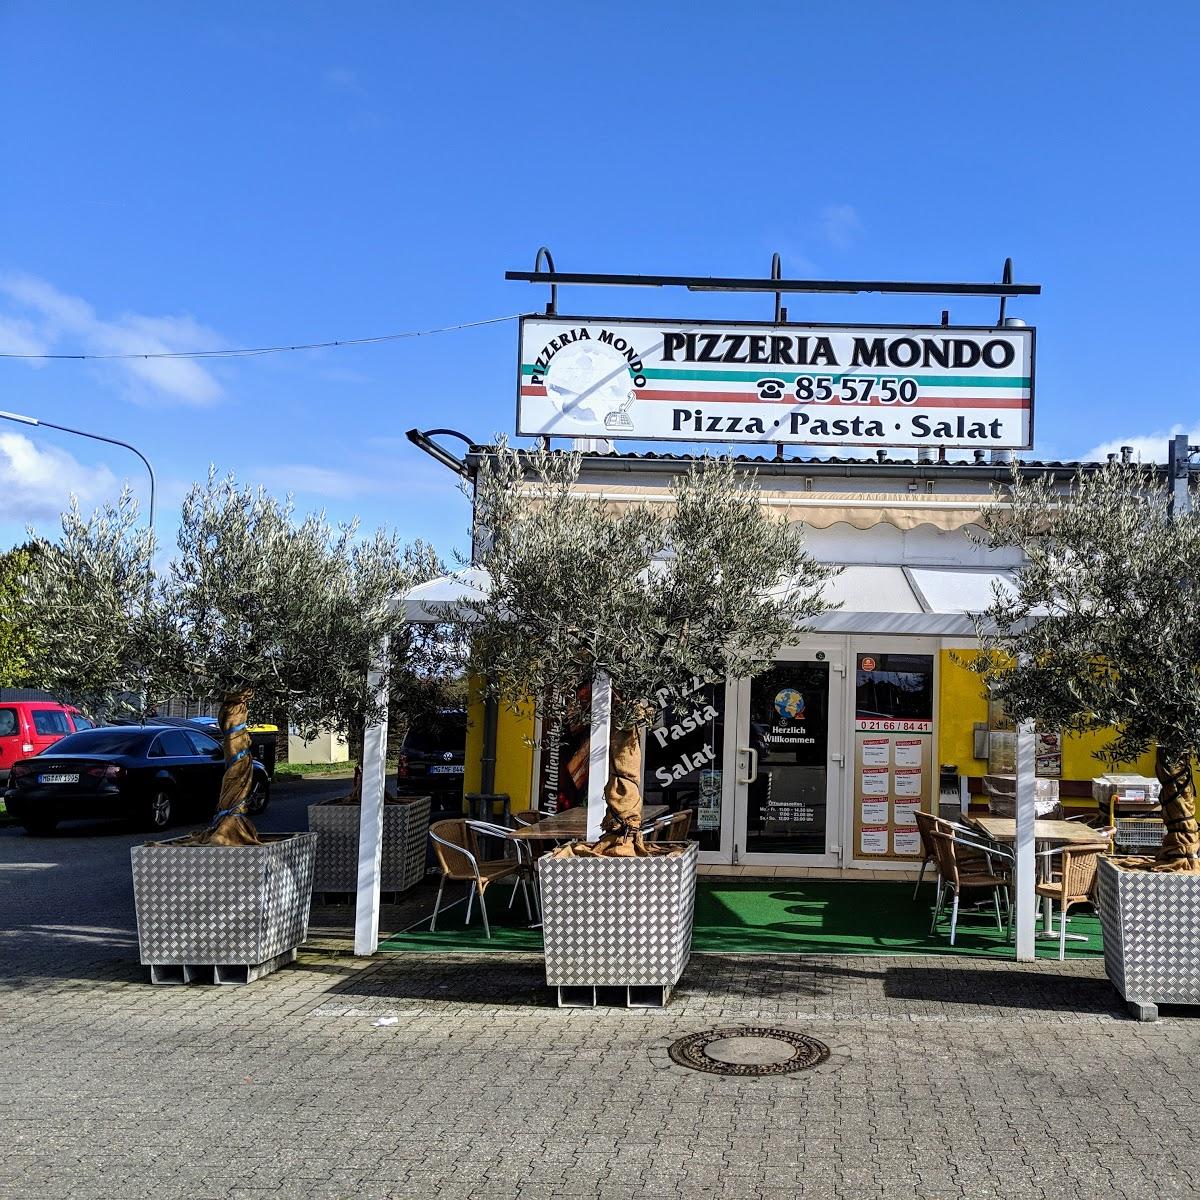 Restaurant "Pizza-Taxi Mondo" in Mönchengladbach